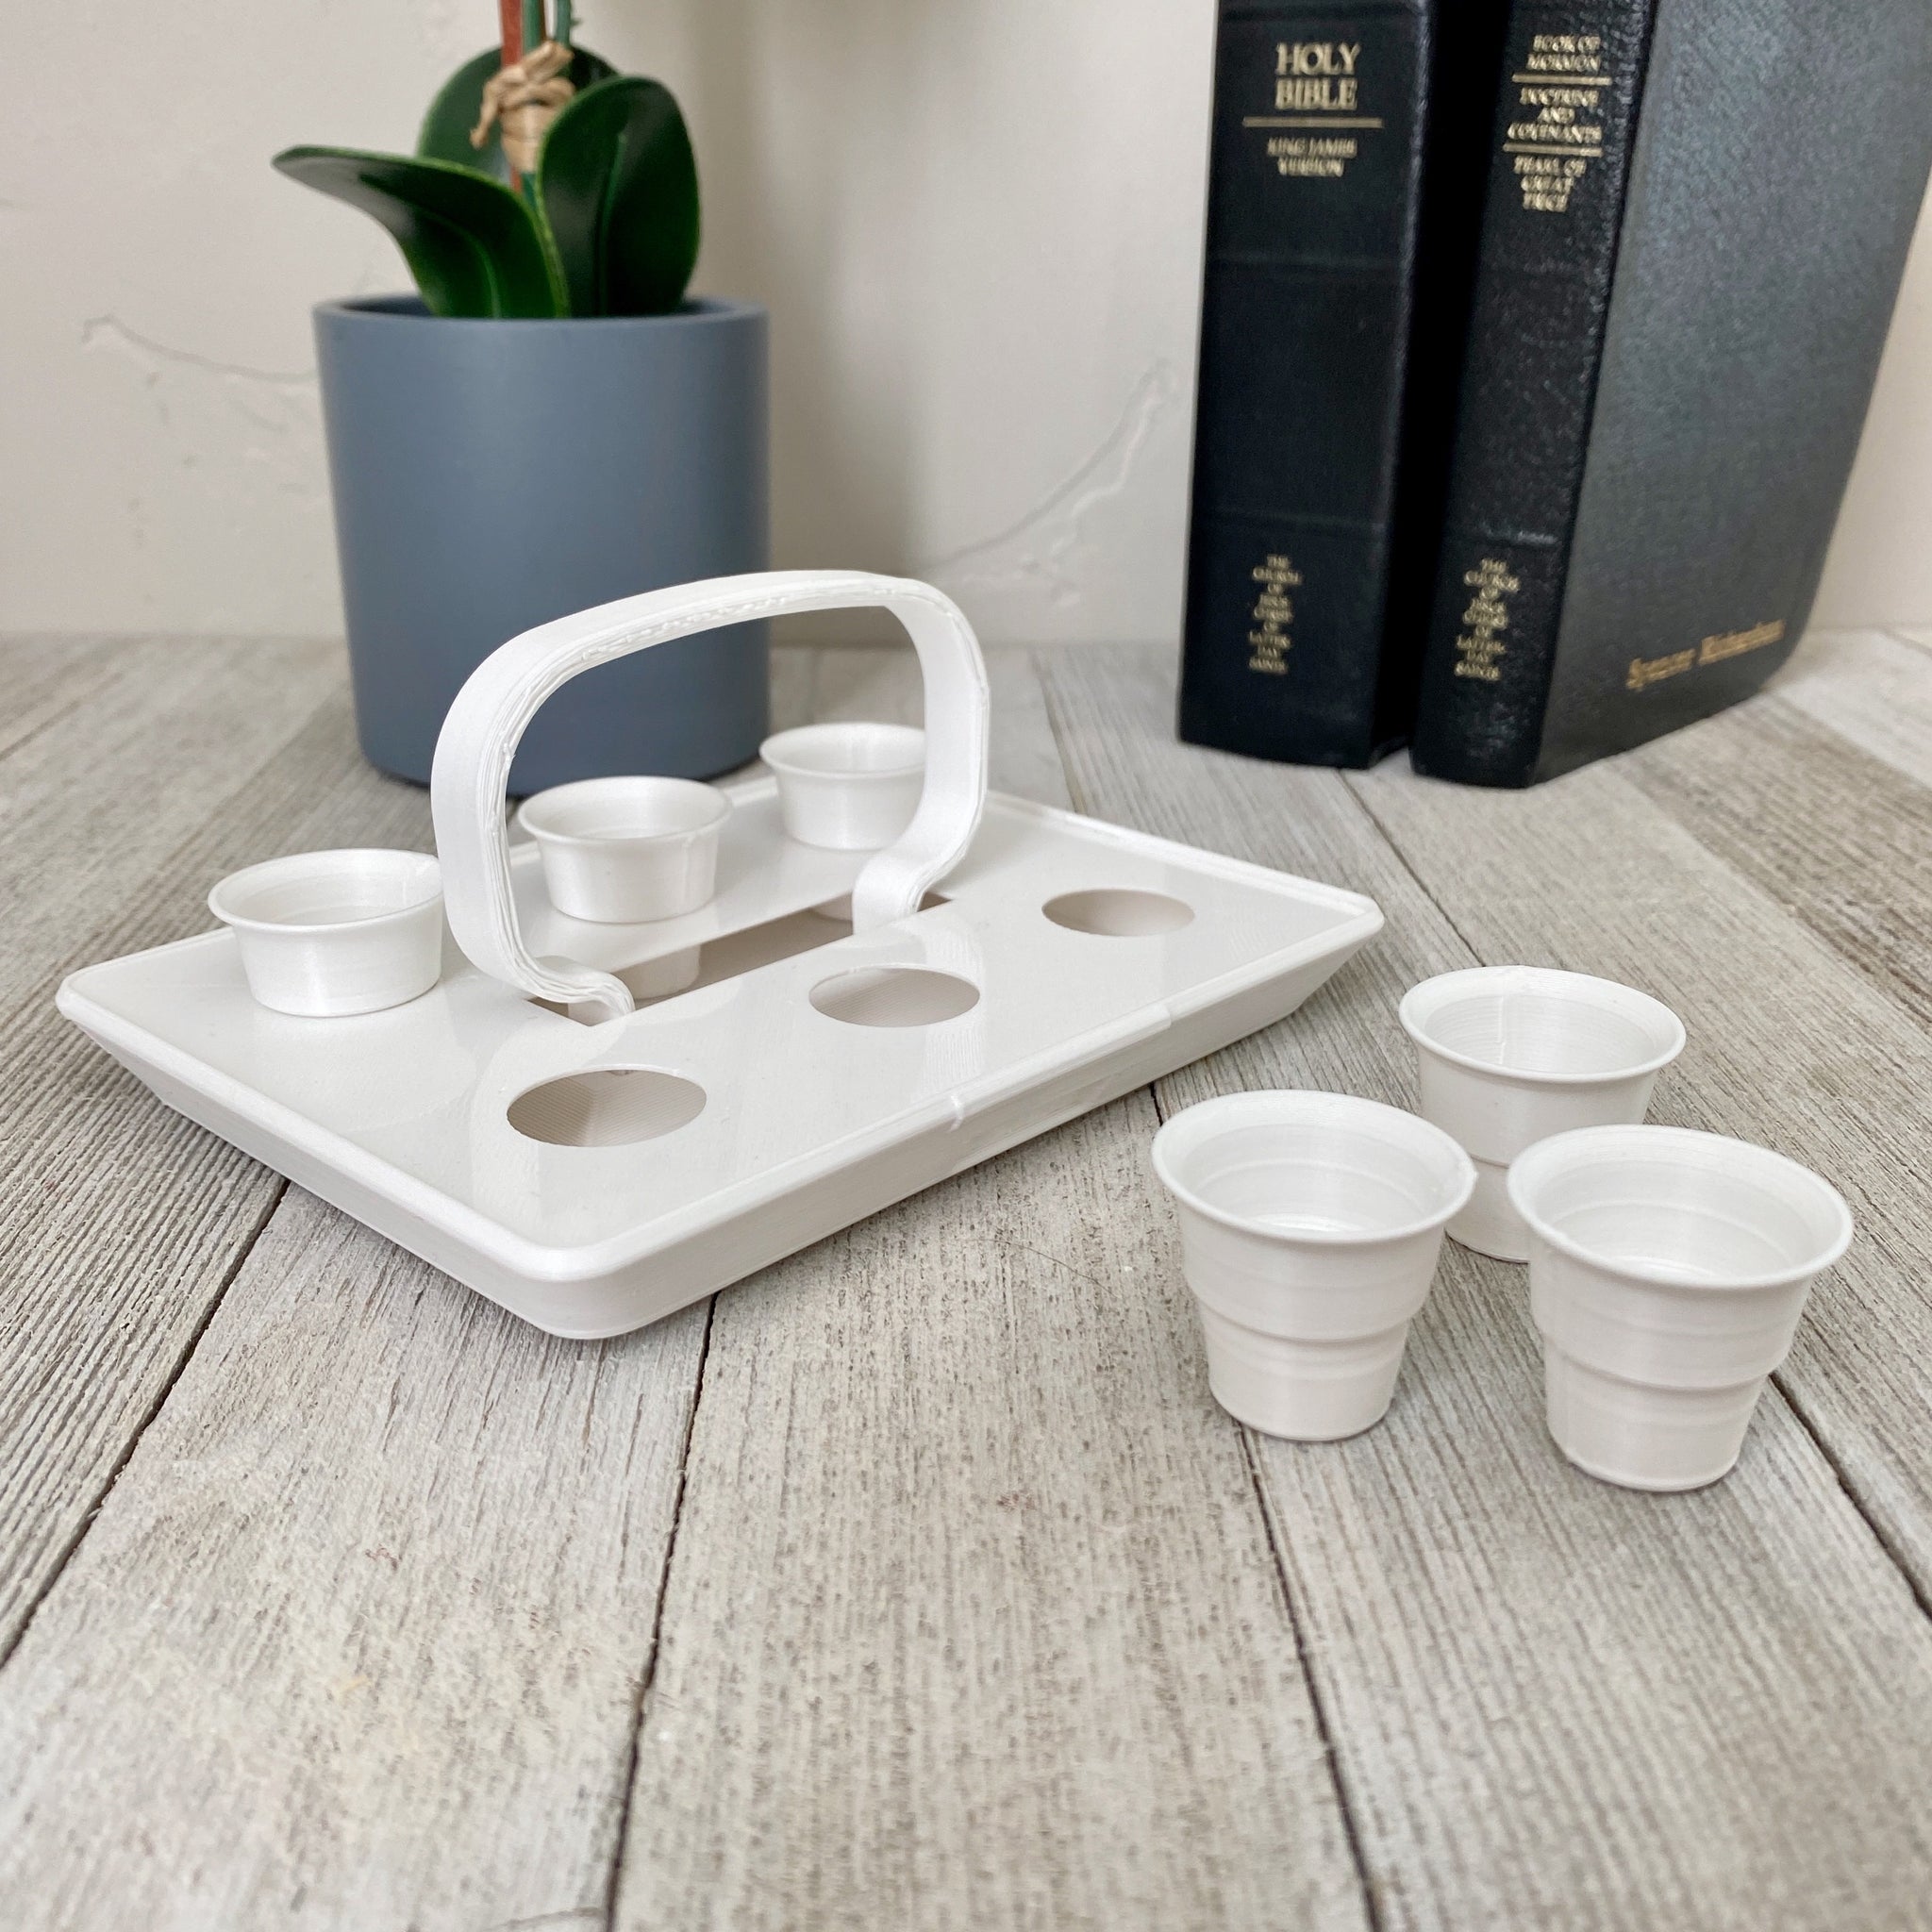 Extra - Reusable Cups for Sacrament Trays